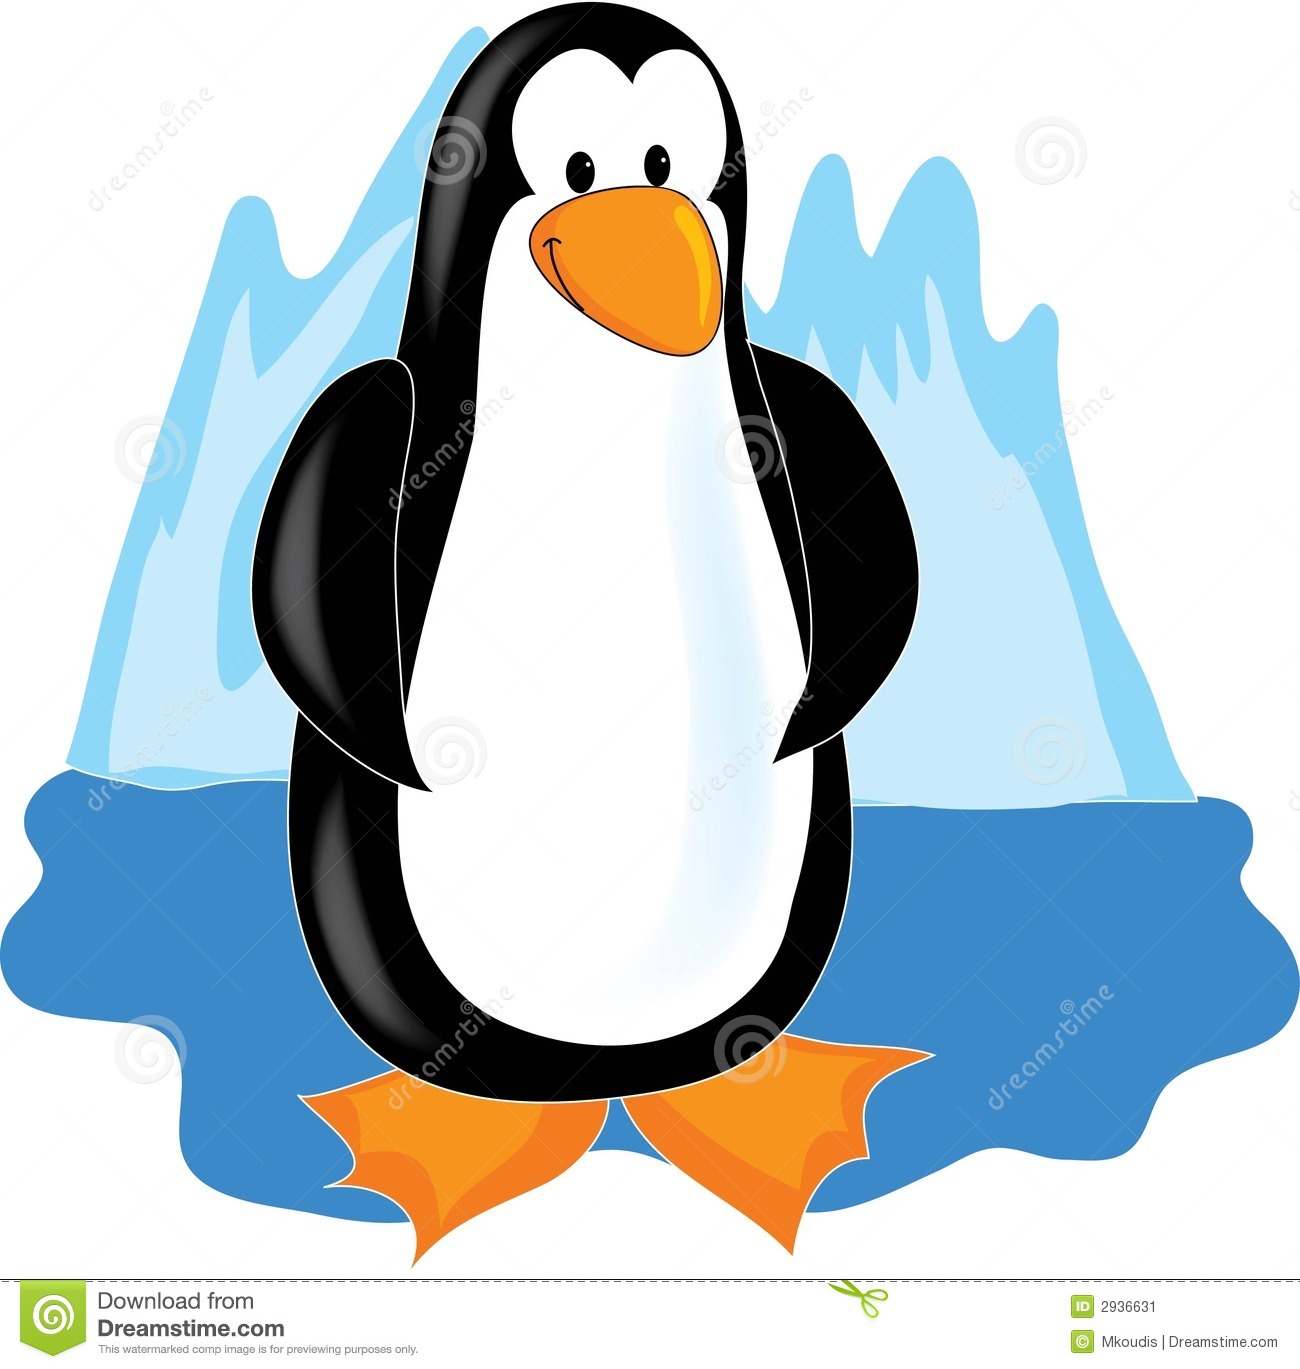 Clip Art Penguins in Antarctica